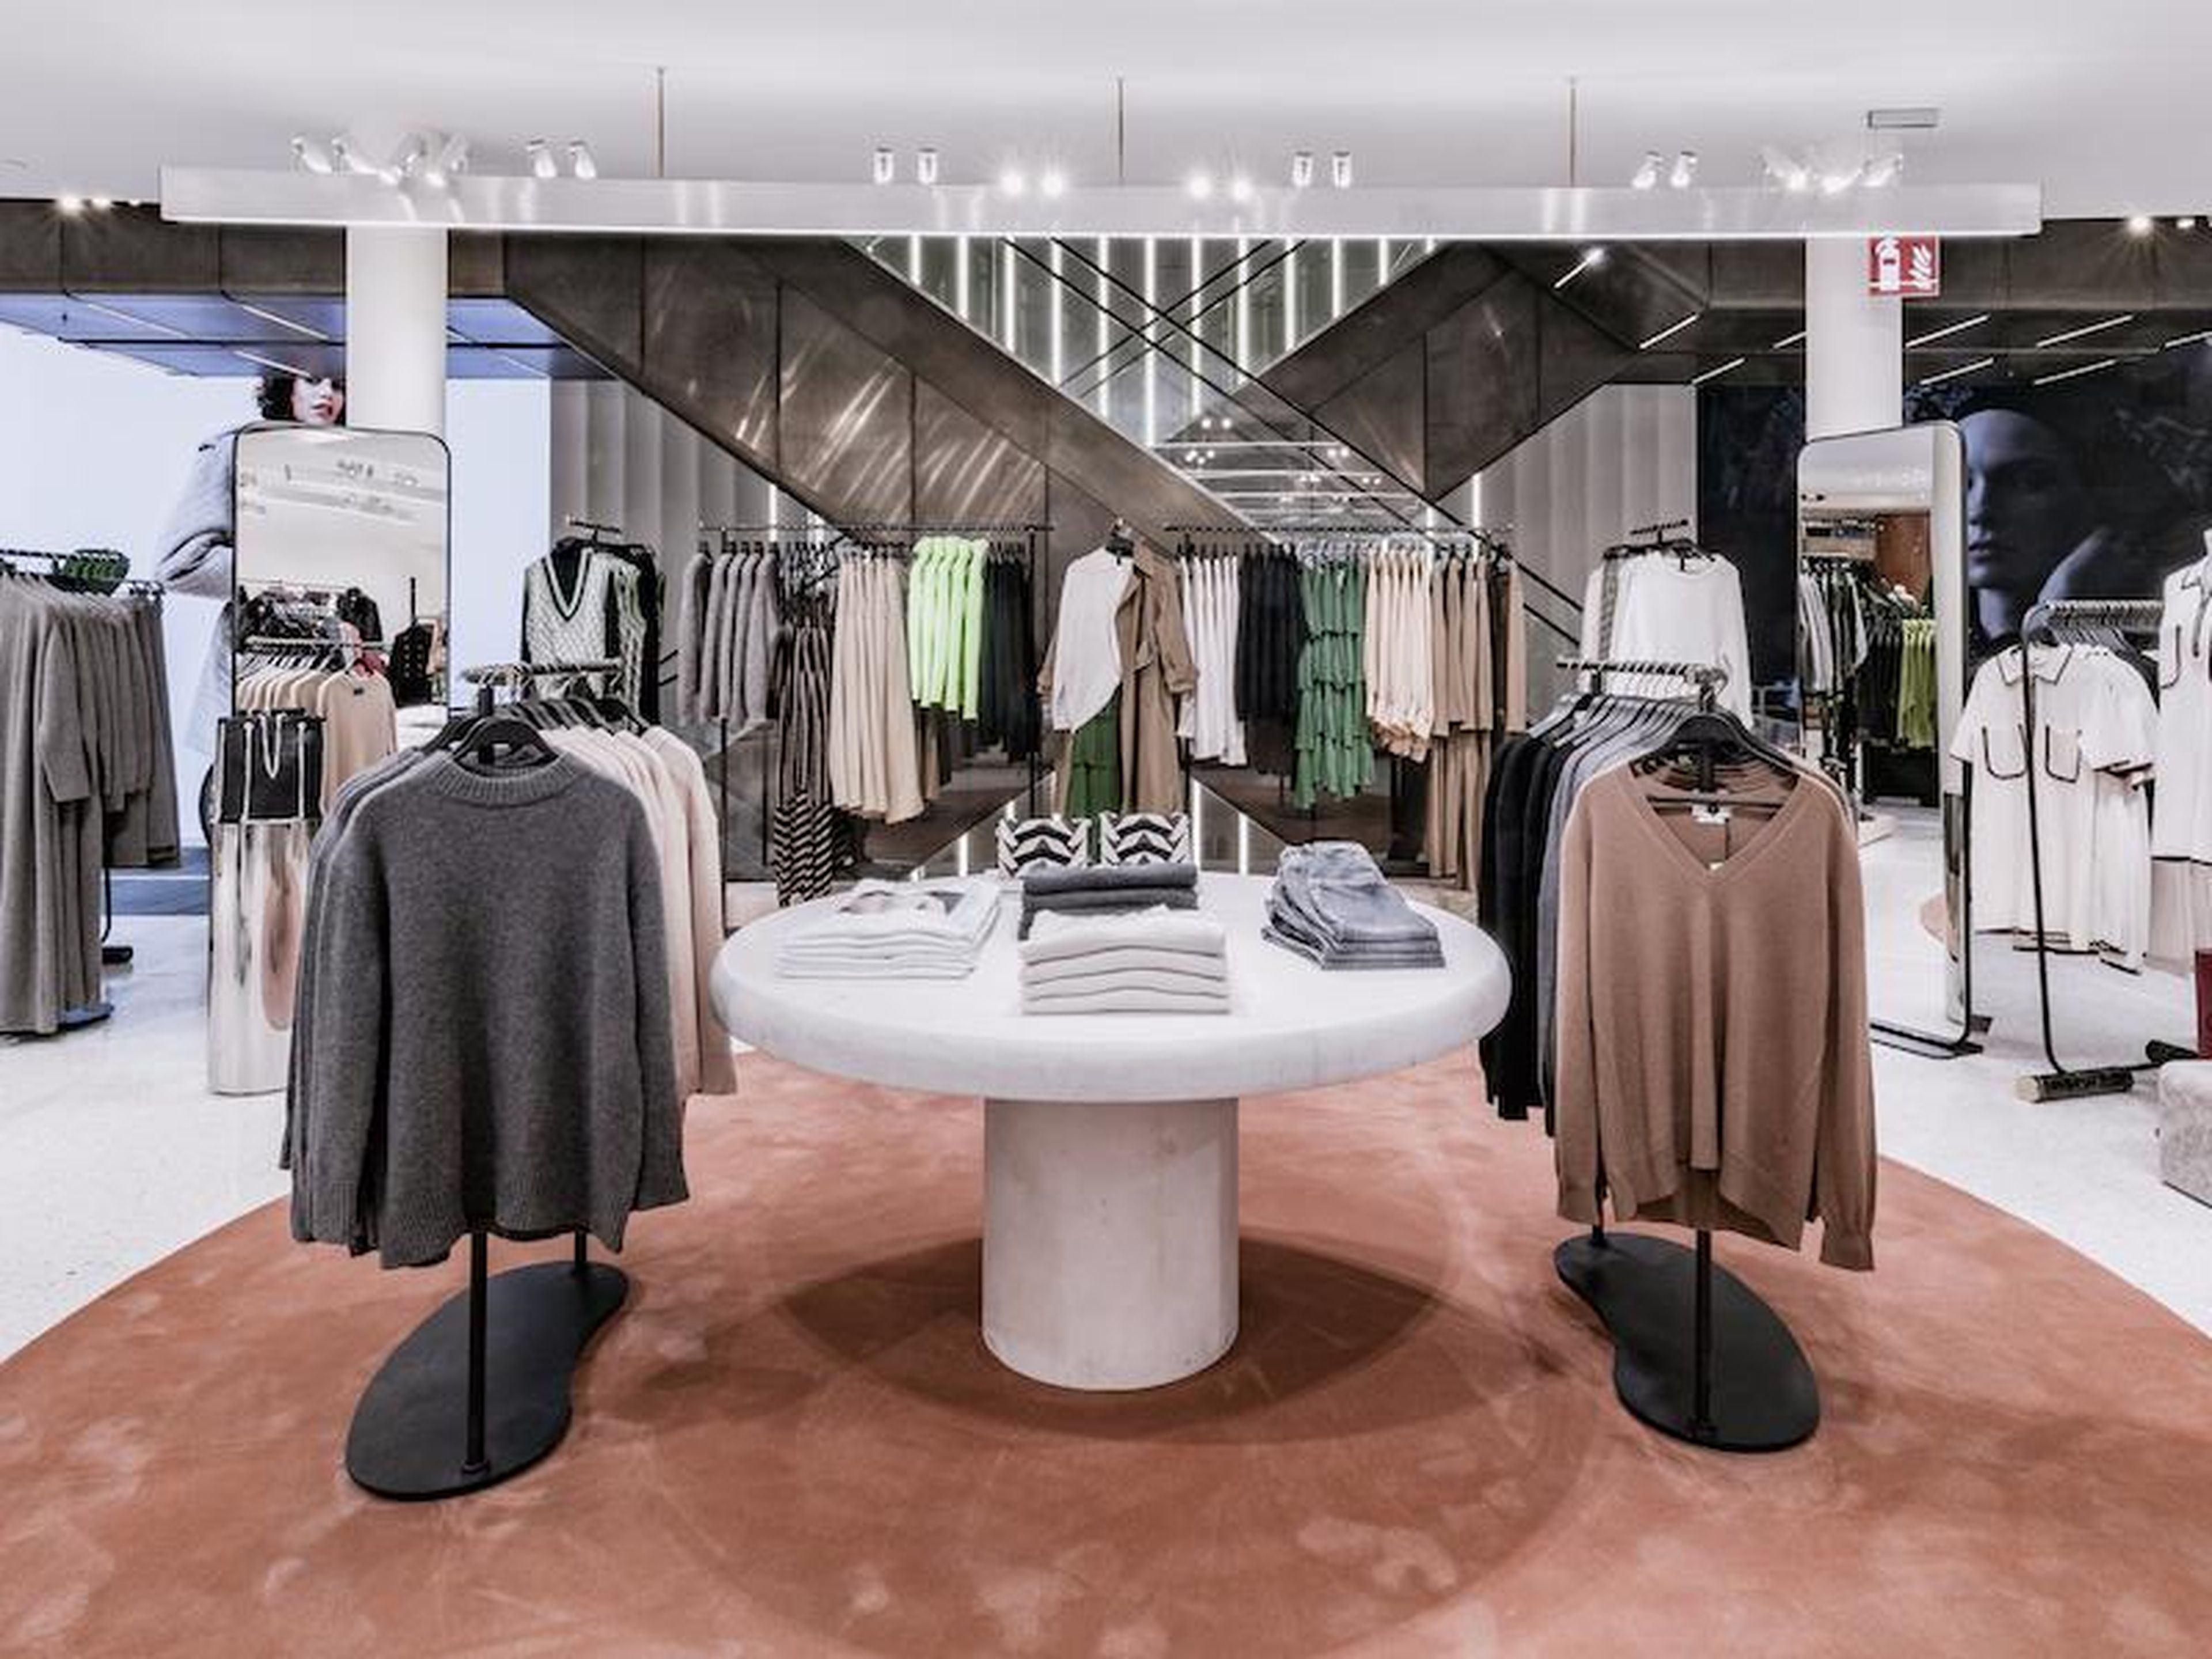 Zara's sleek furniture design in one of its Milan stores.